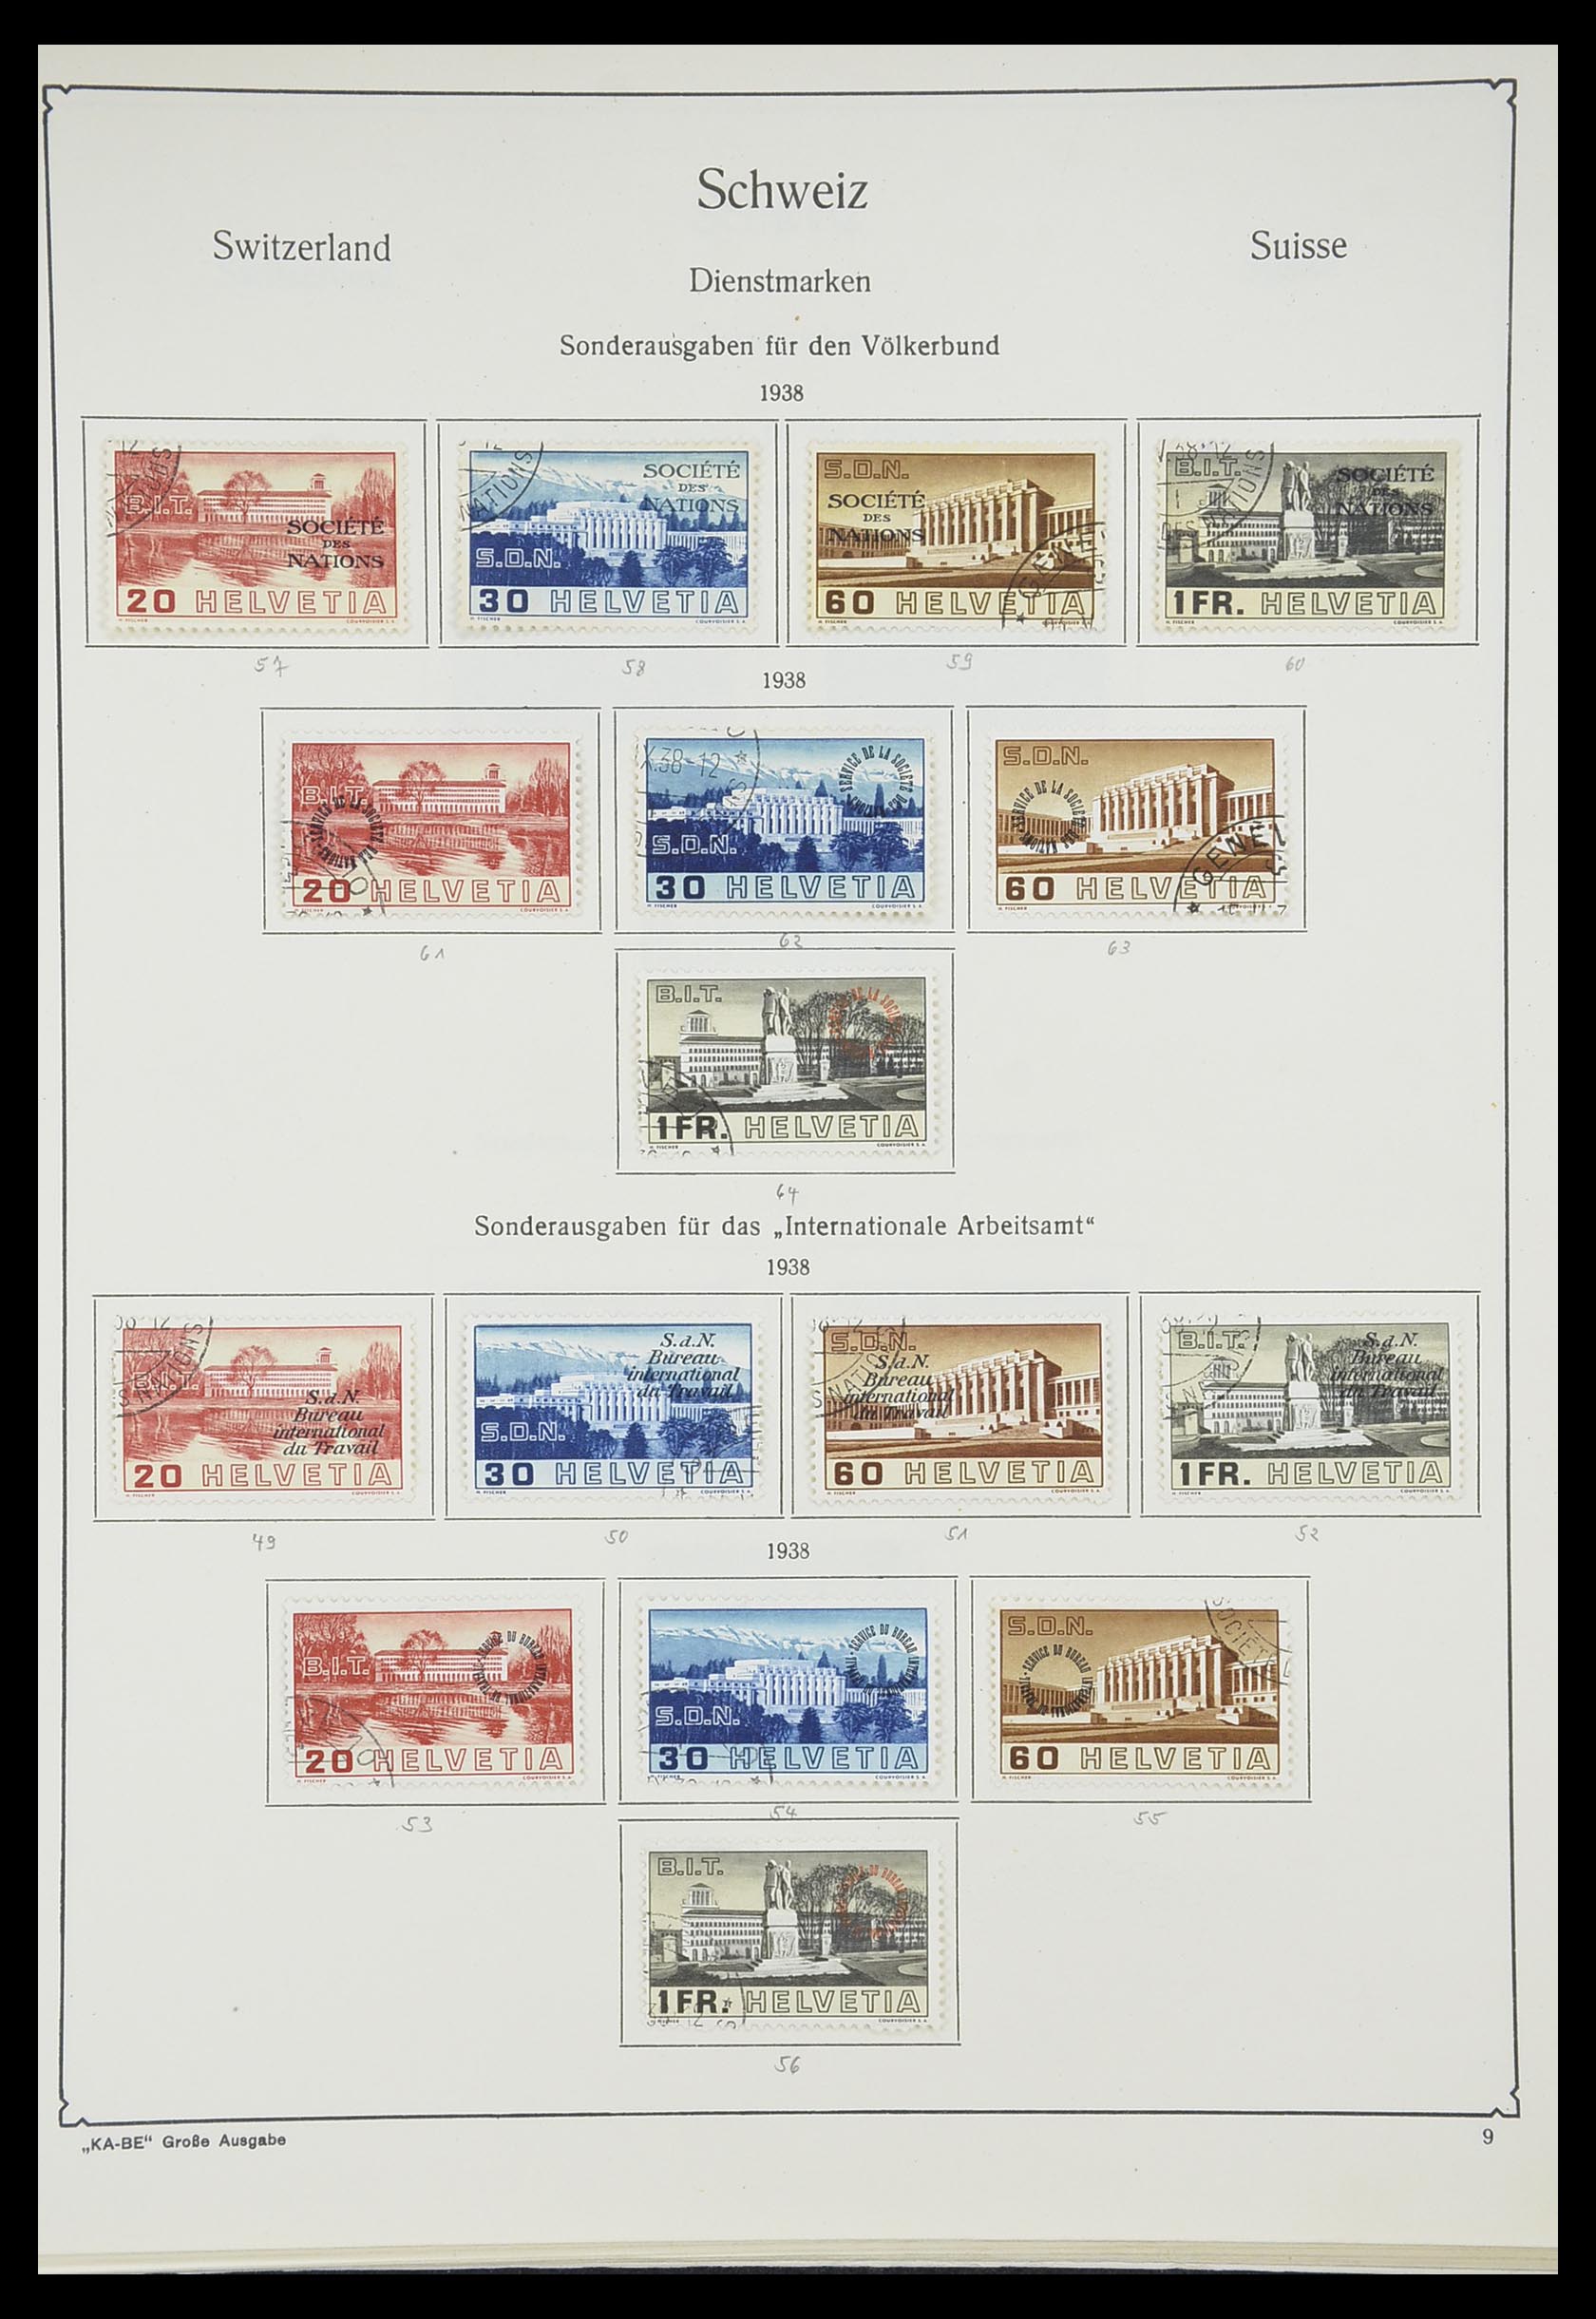 33327 010 - Stamp collection 33327 Switzerland service 1922-1989.